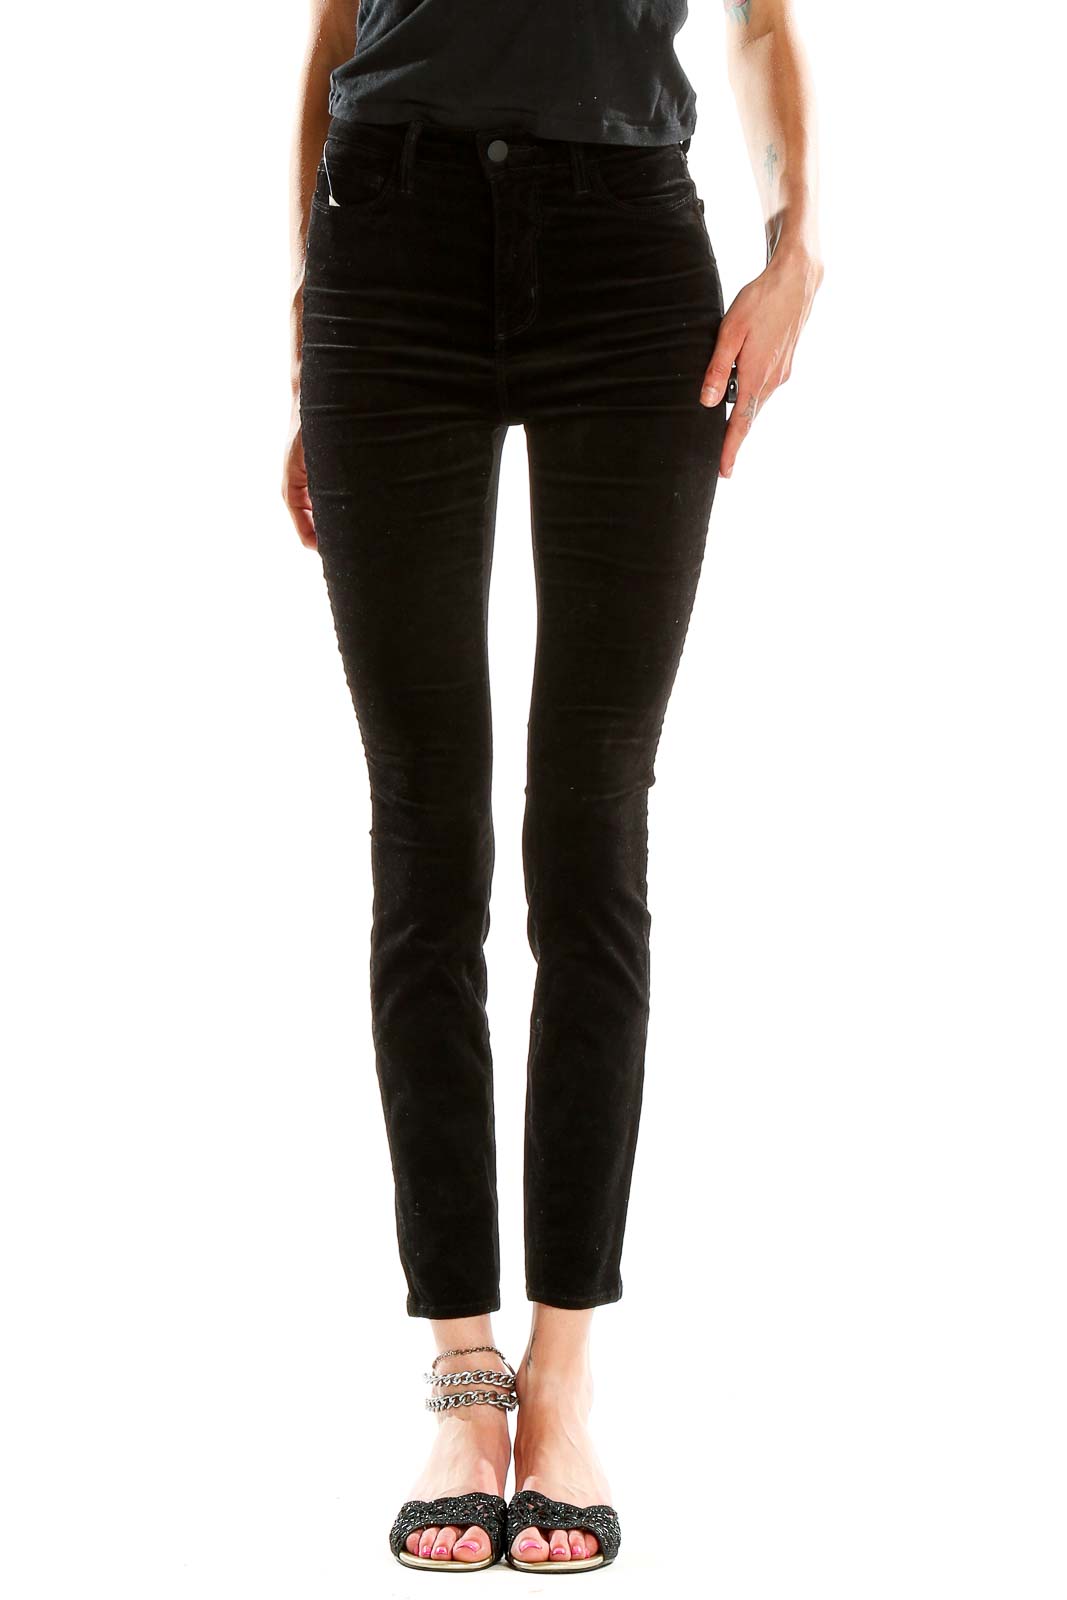 Black Velour Skinny Jeans Front